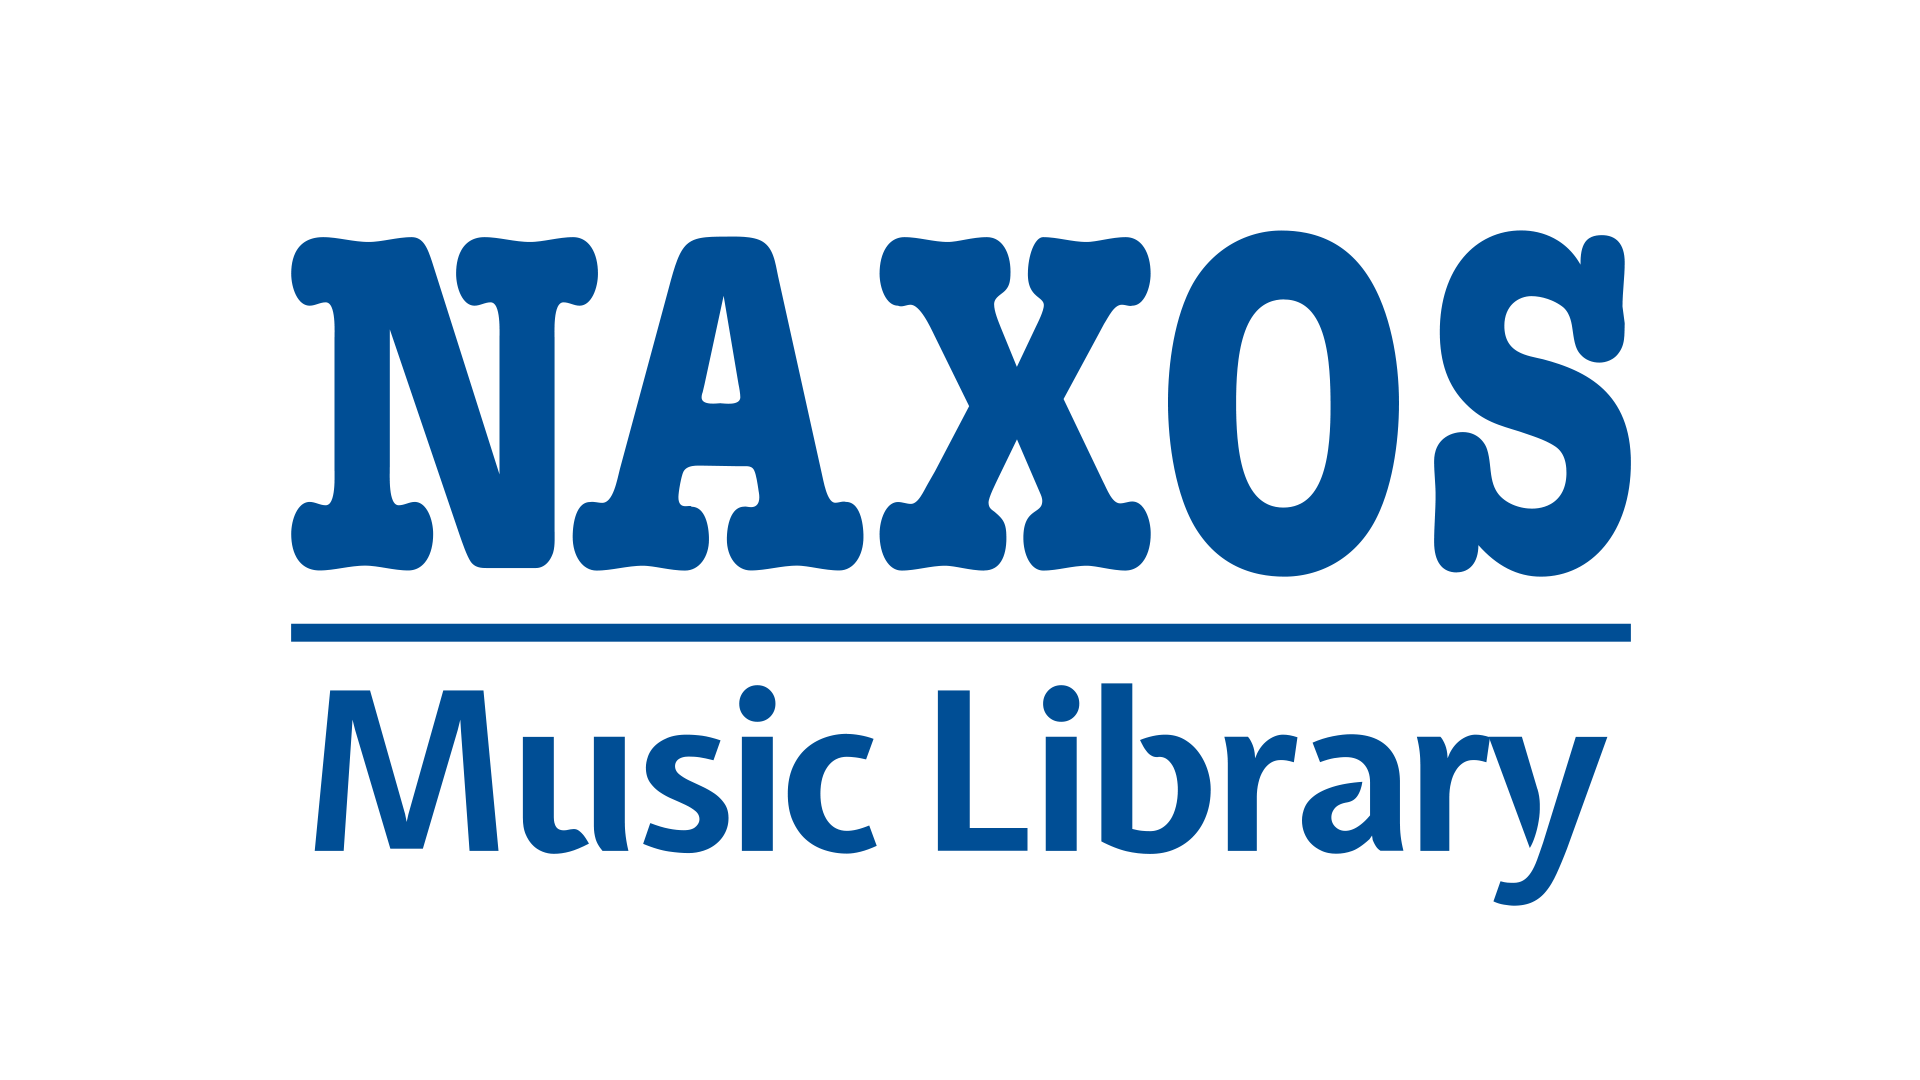 لوگوی کتابخانه موسیقی ناکسوس